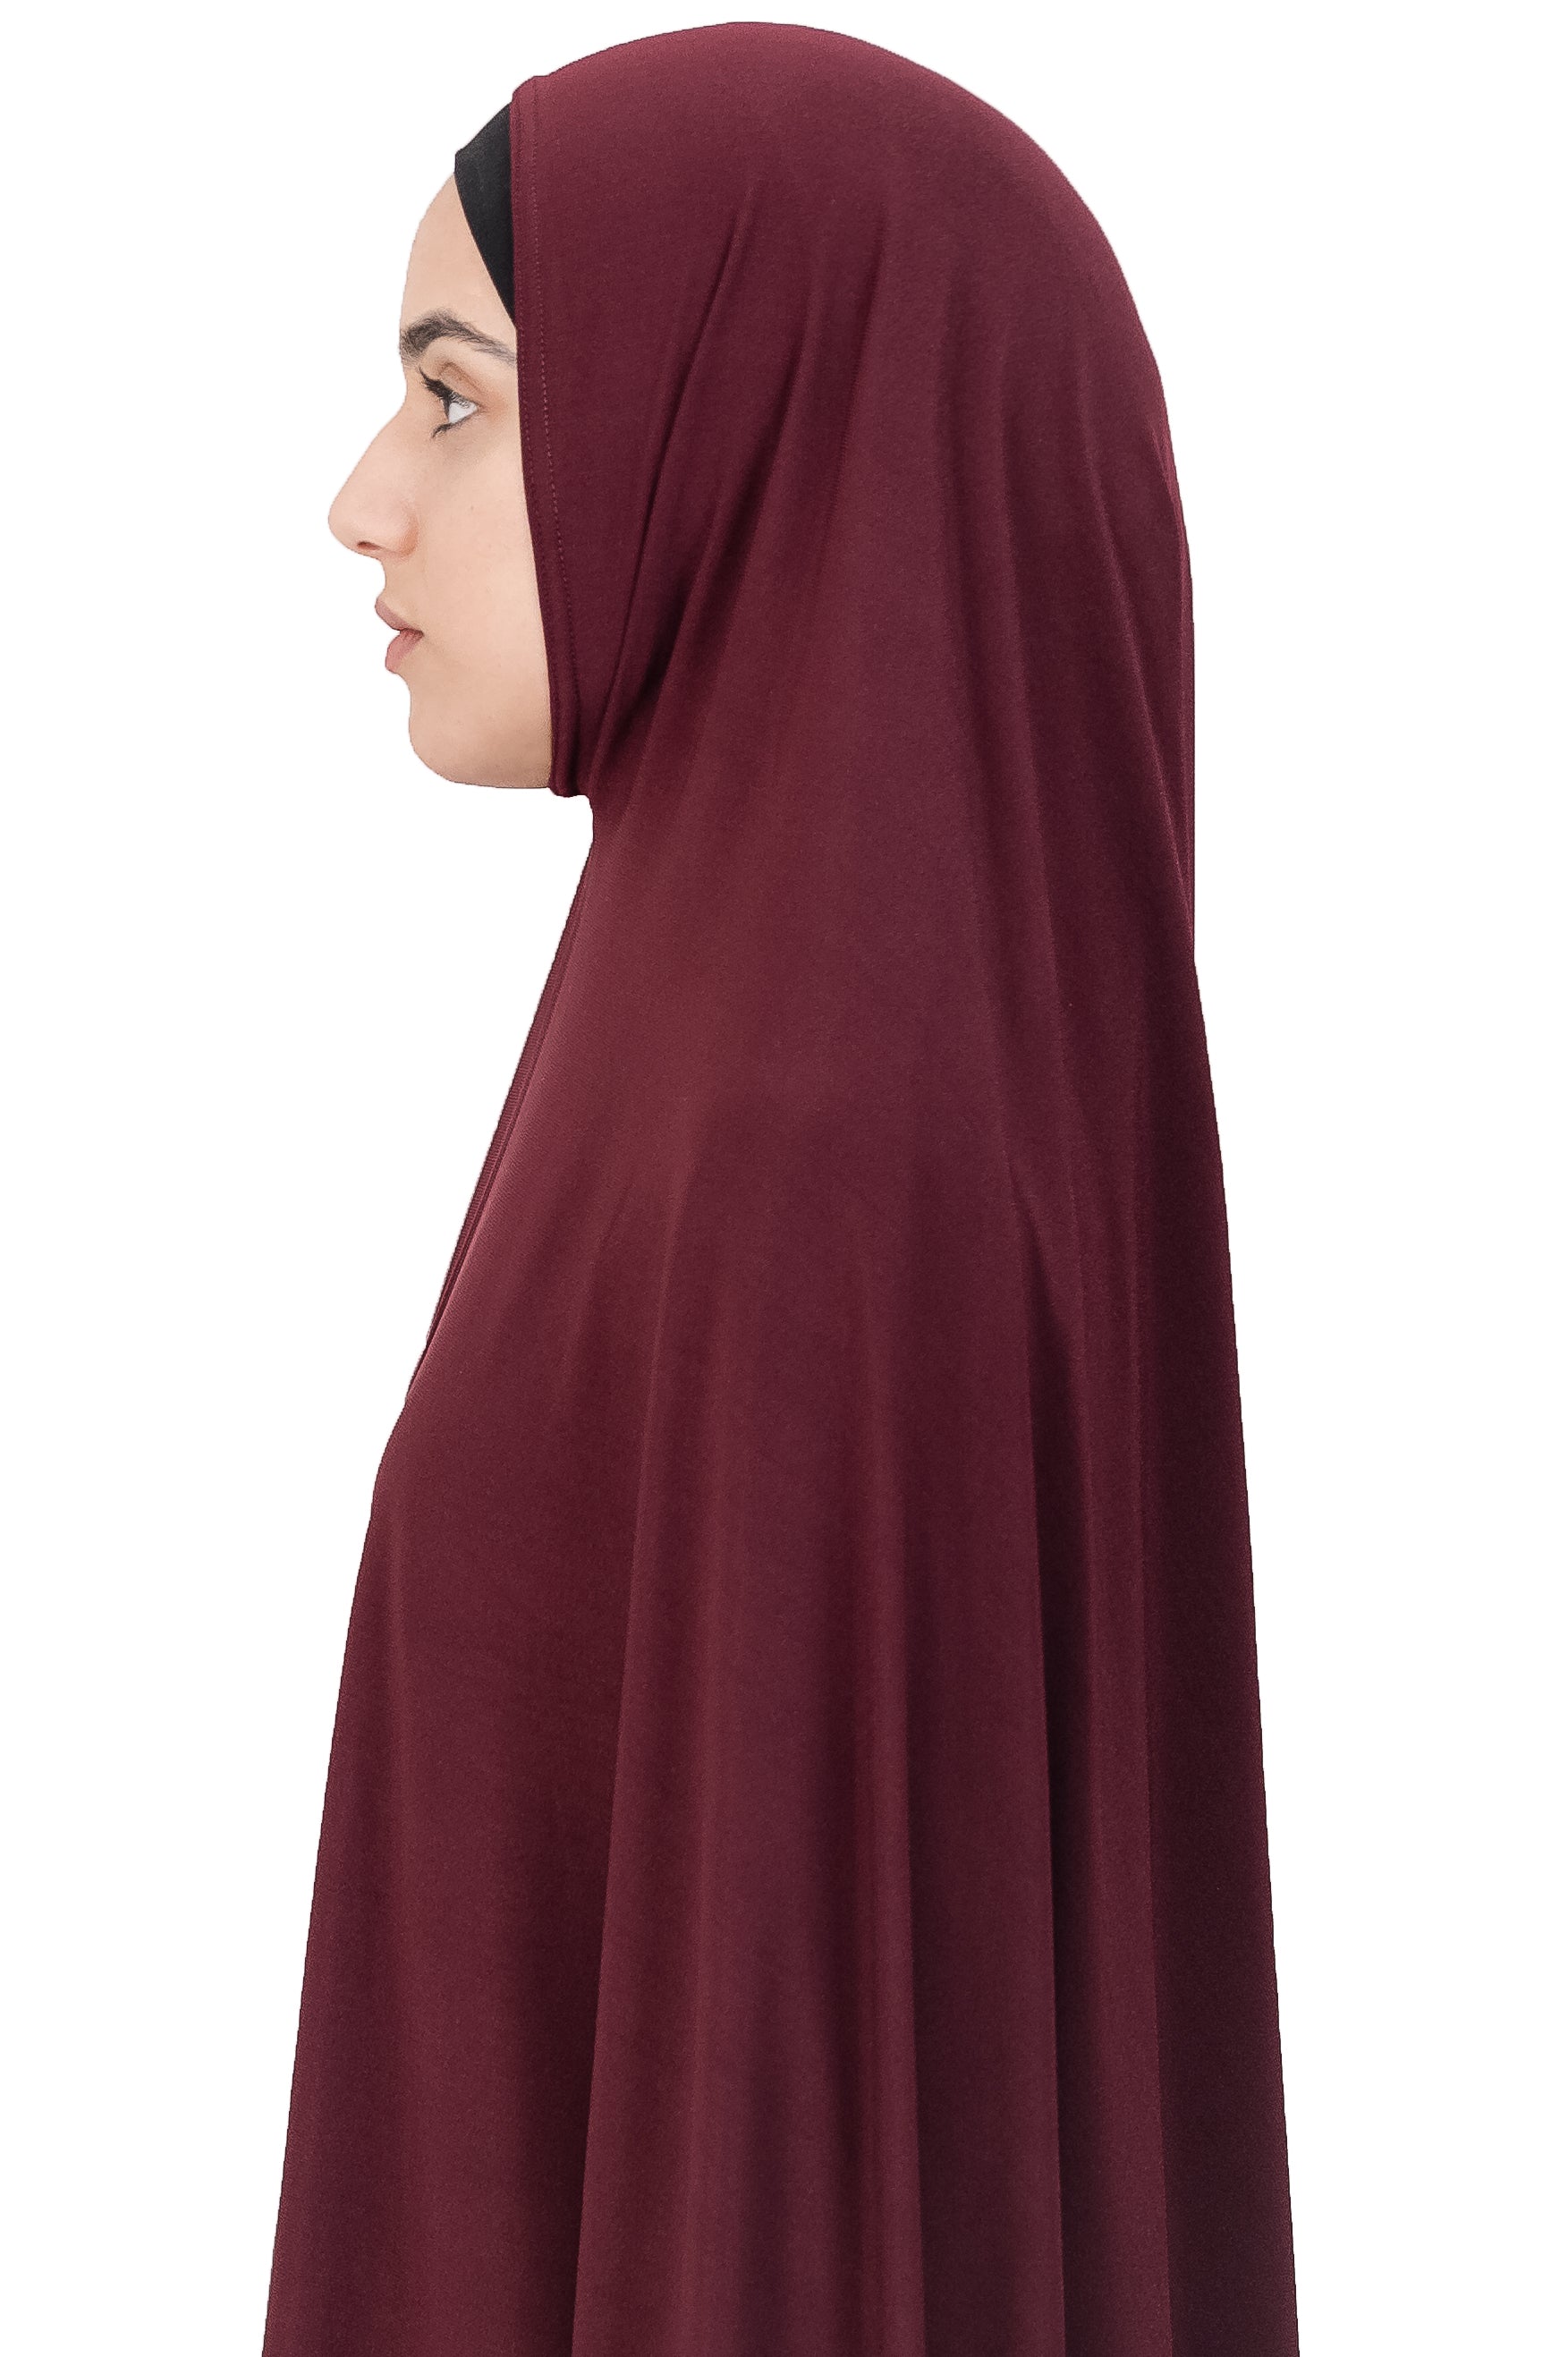 Standard Length Sleeved Jelbab in Maroun - Behind The Veil